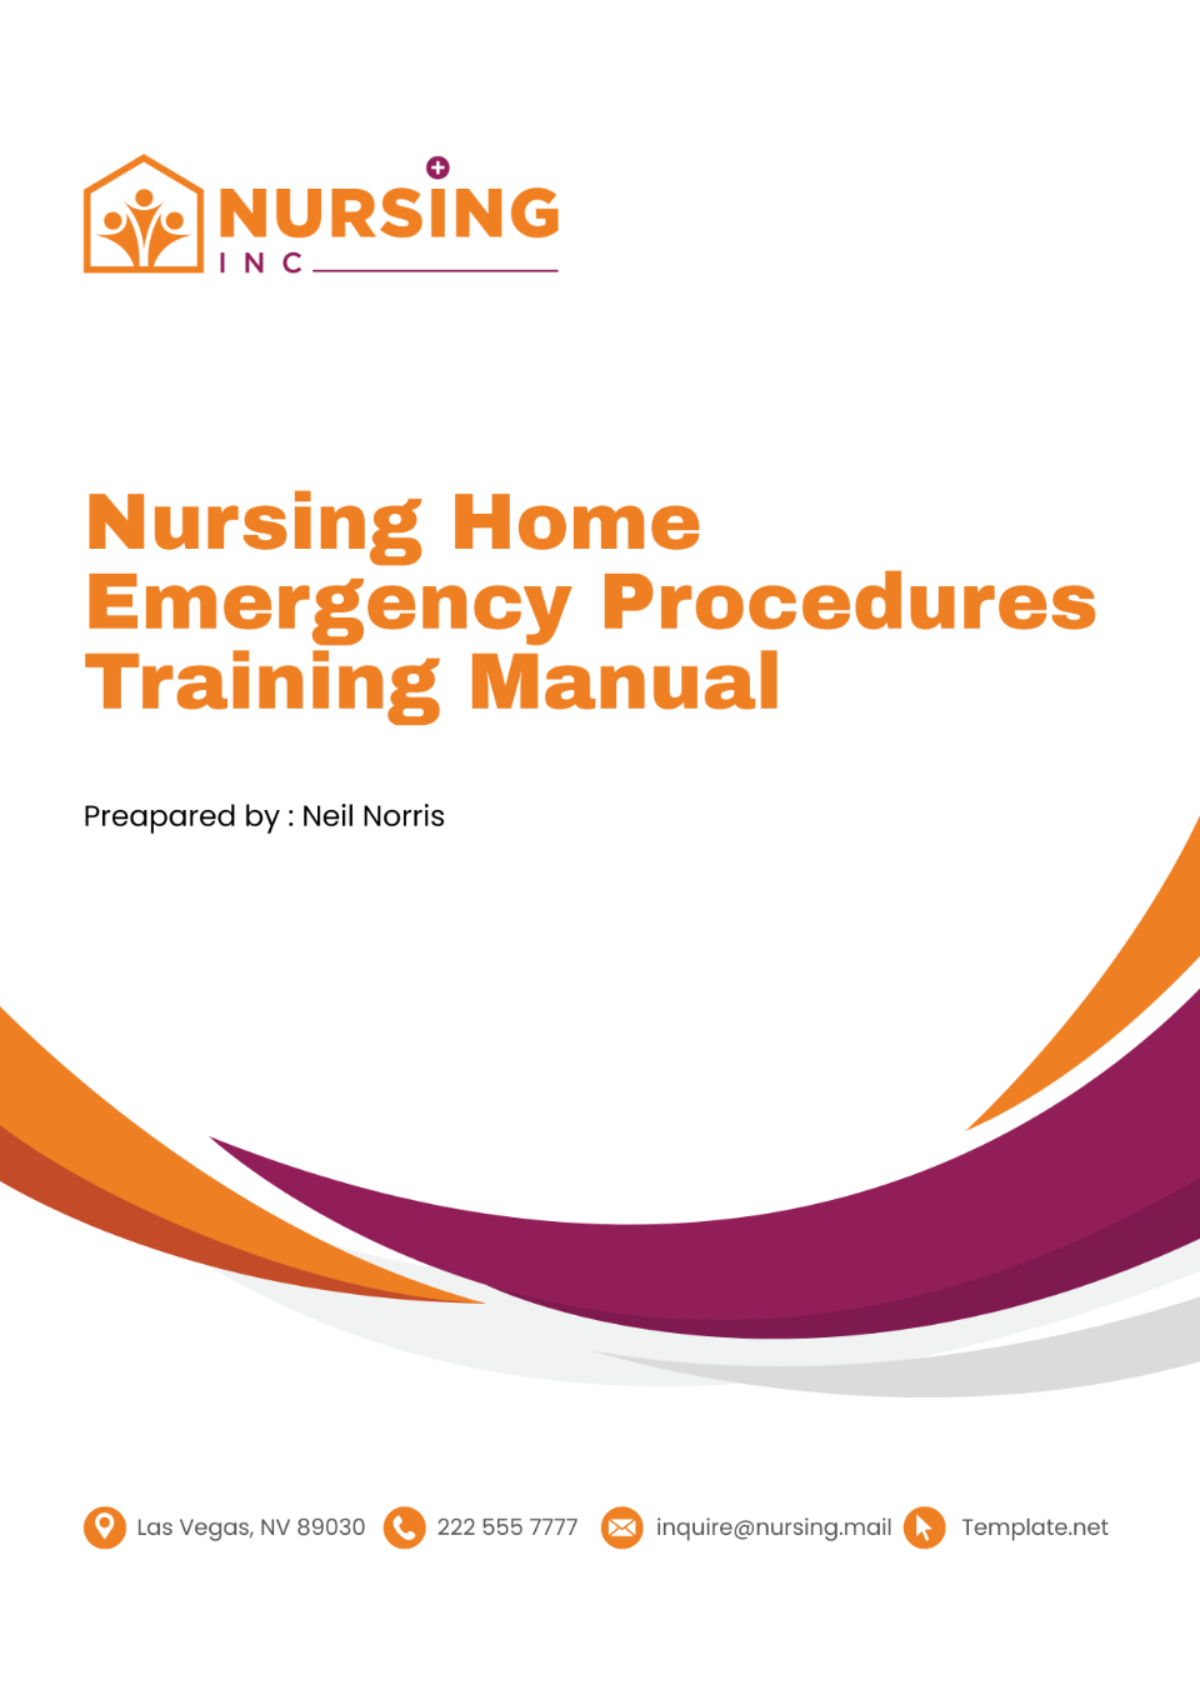 Nursing Home Emergency Procedures Training Manual Template